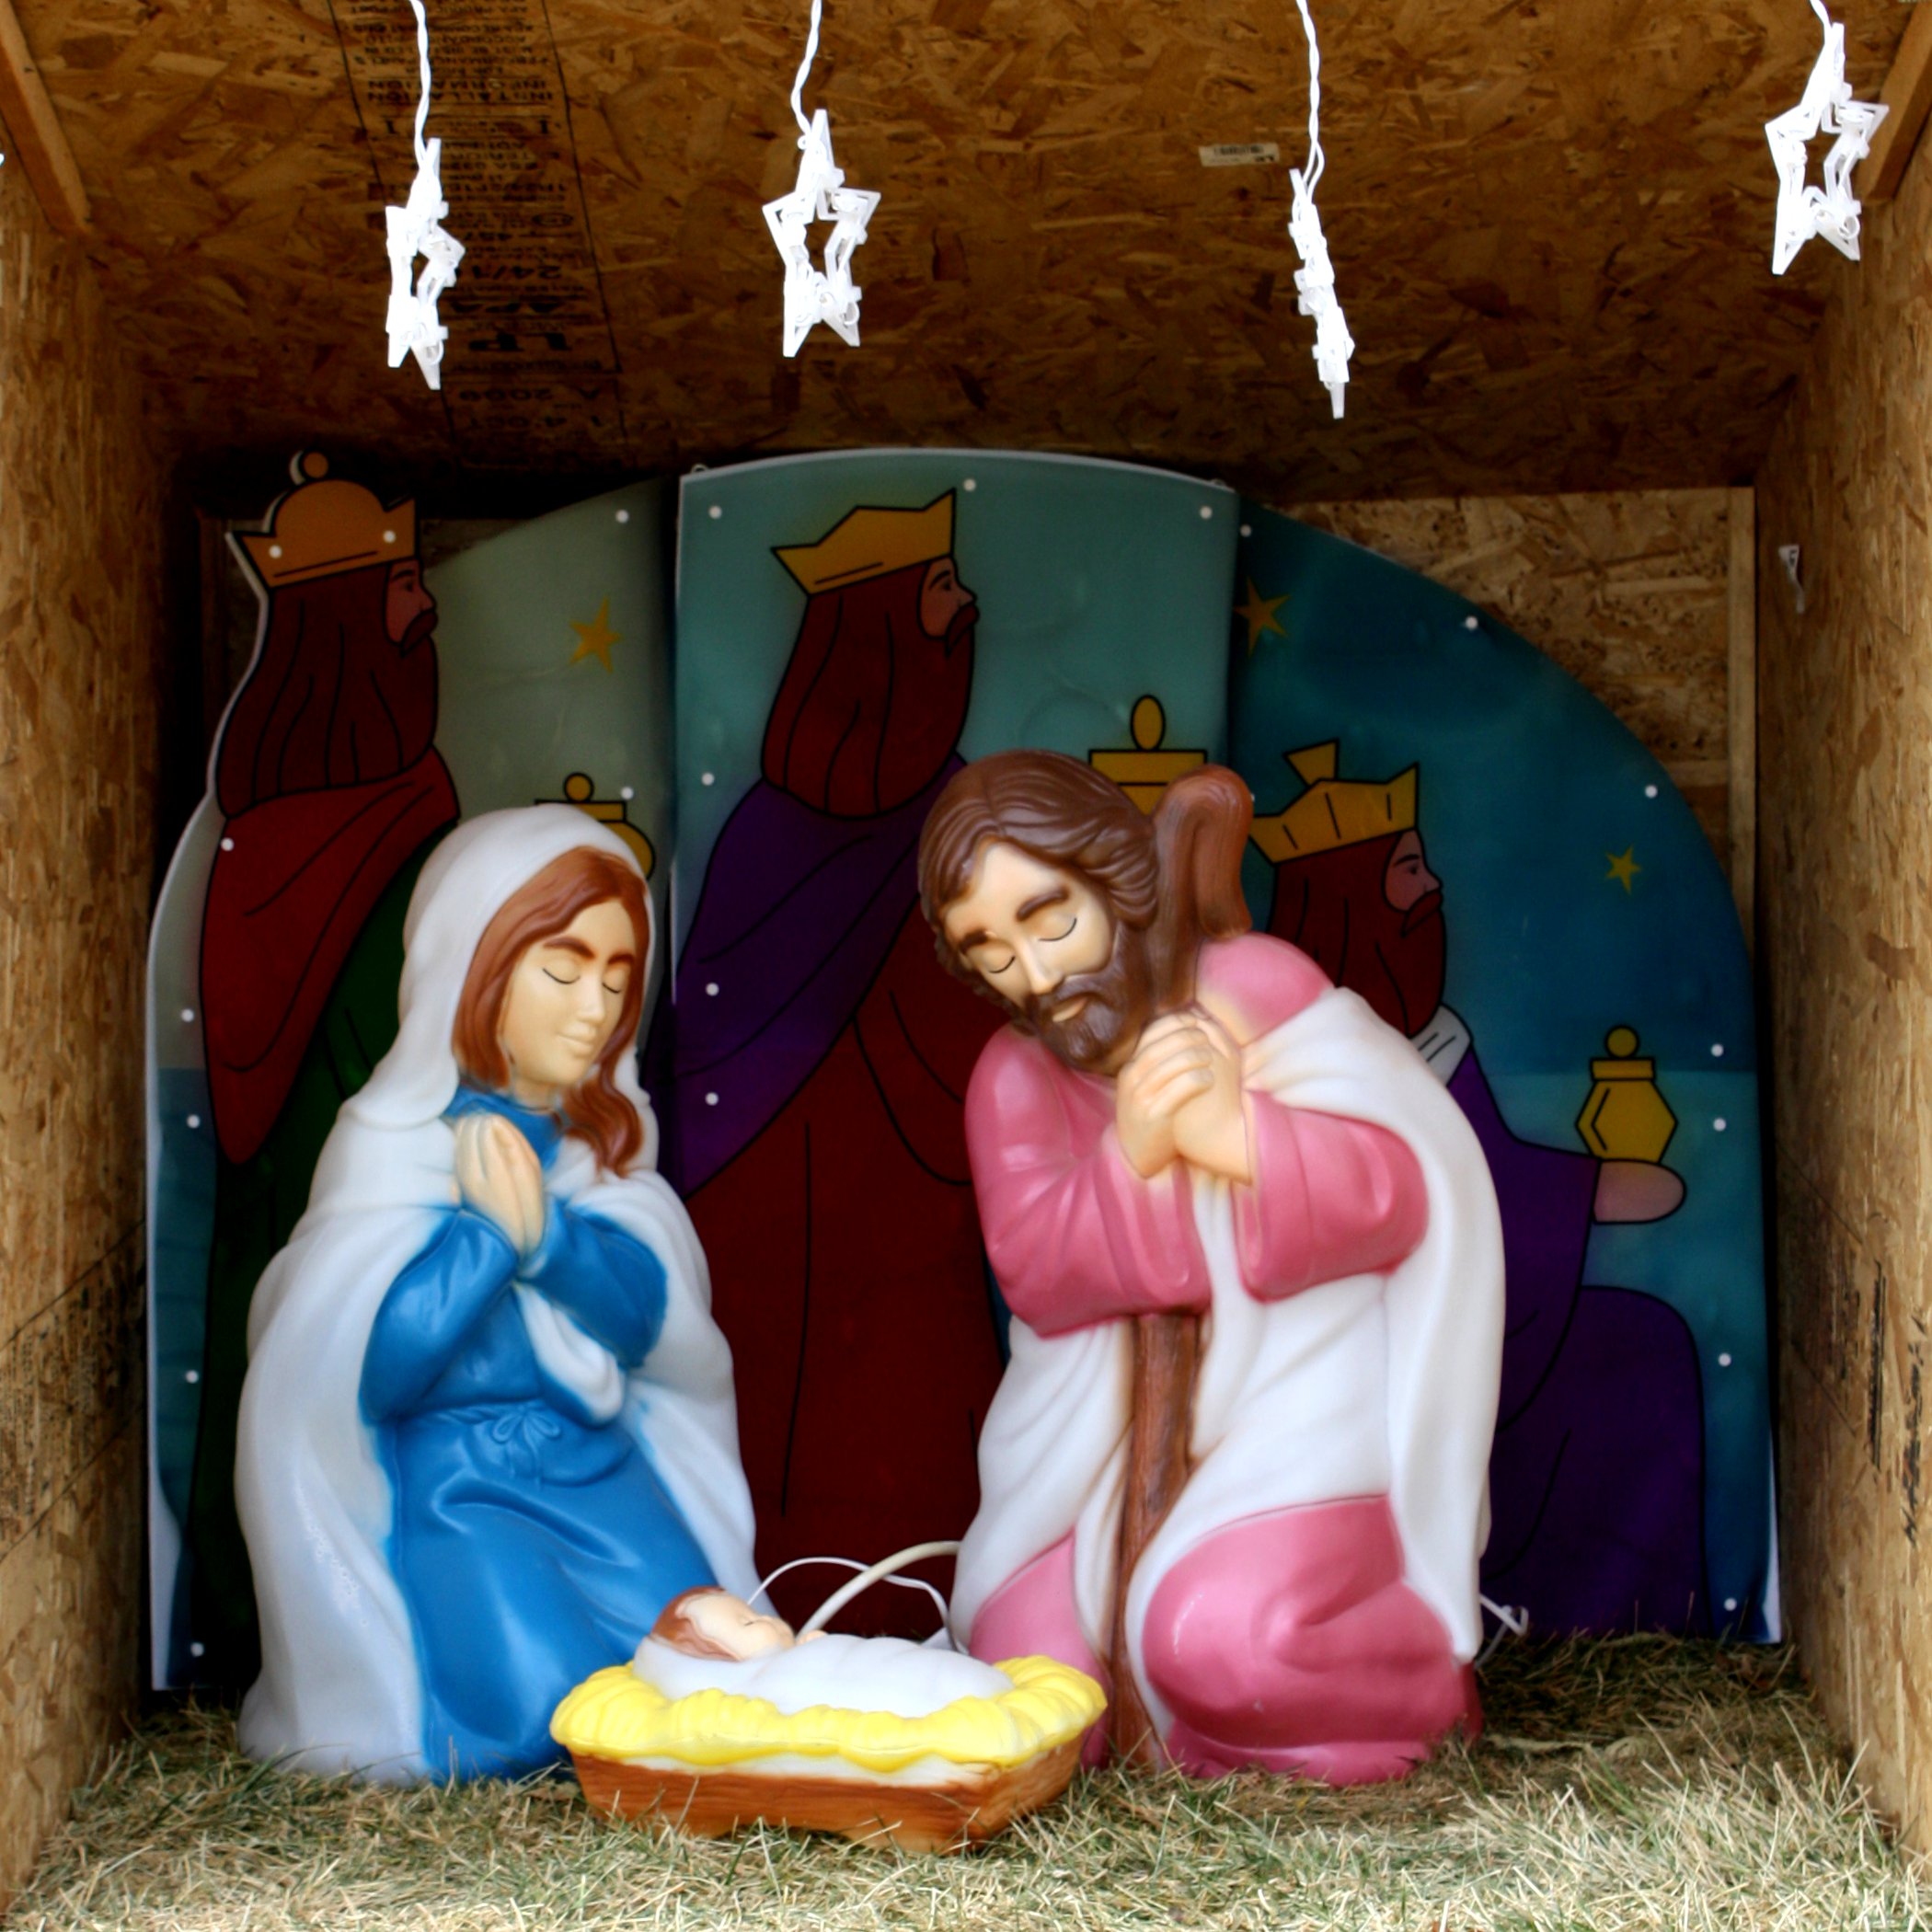 Free Nativity Images